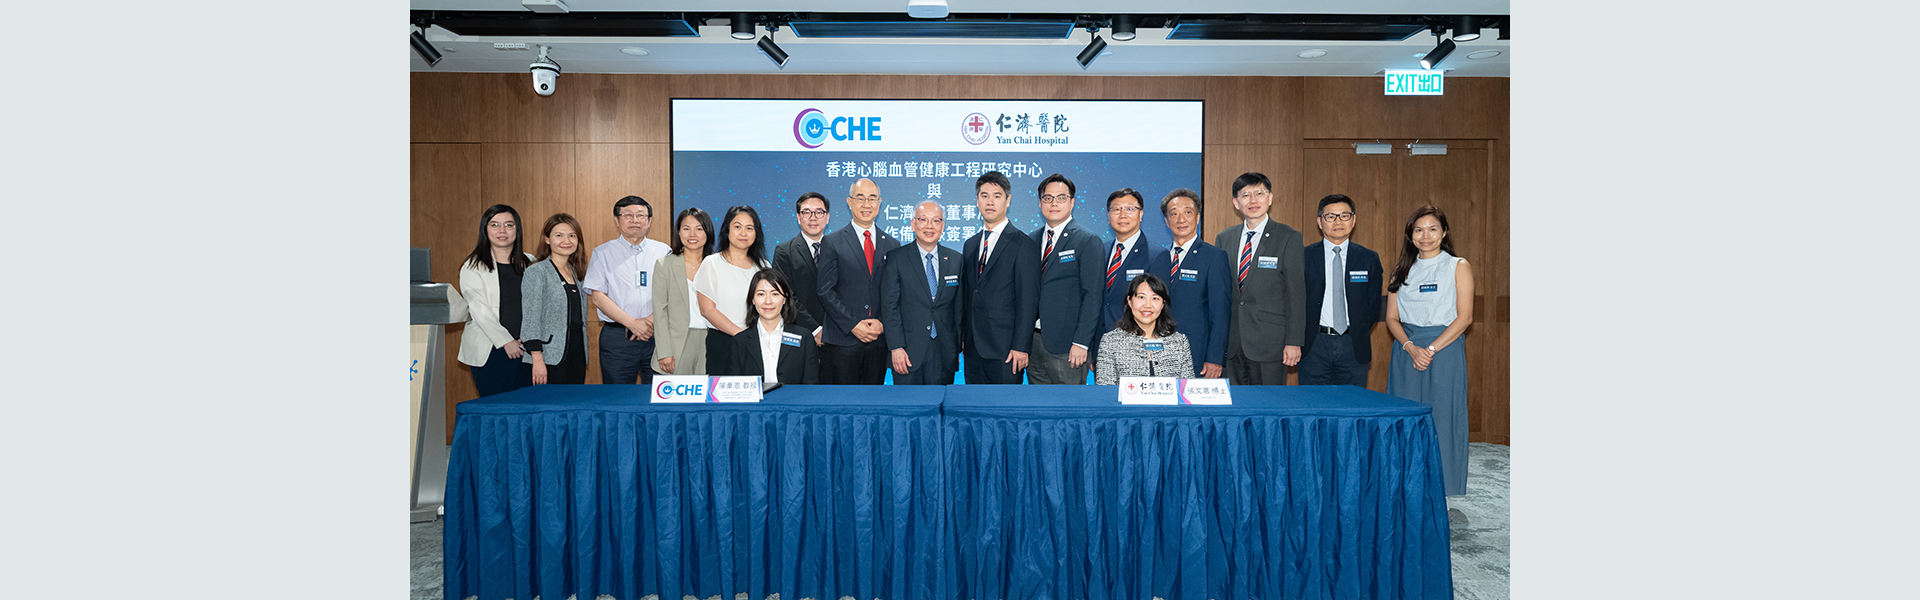 COCHE and Yan Chai Hospital Board